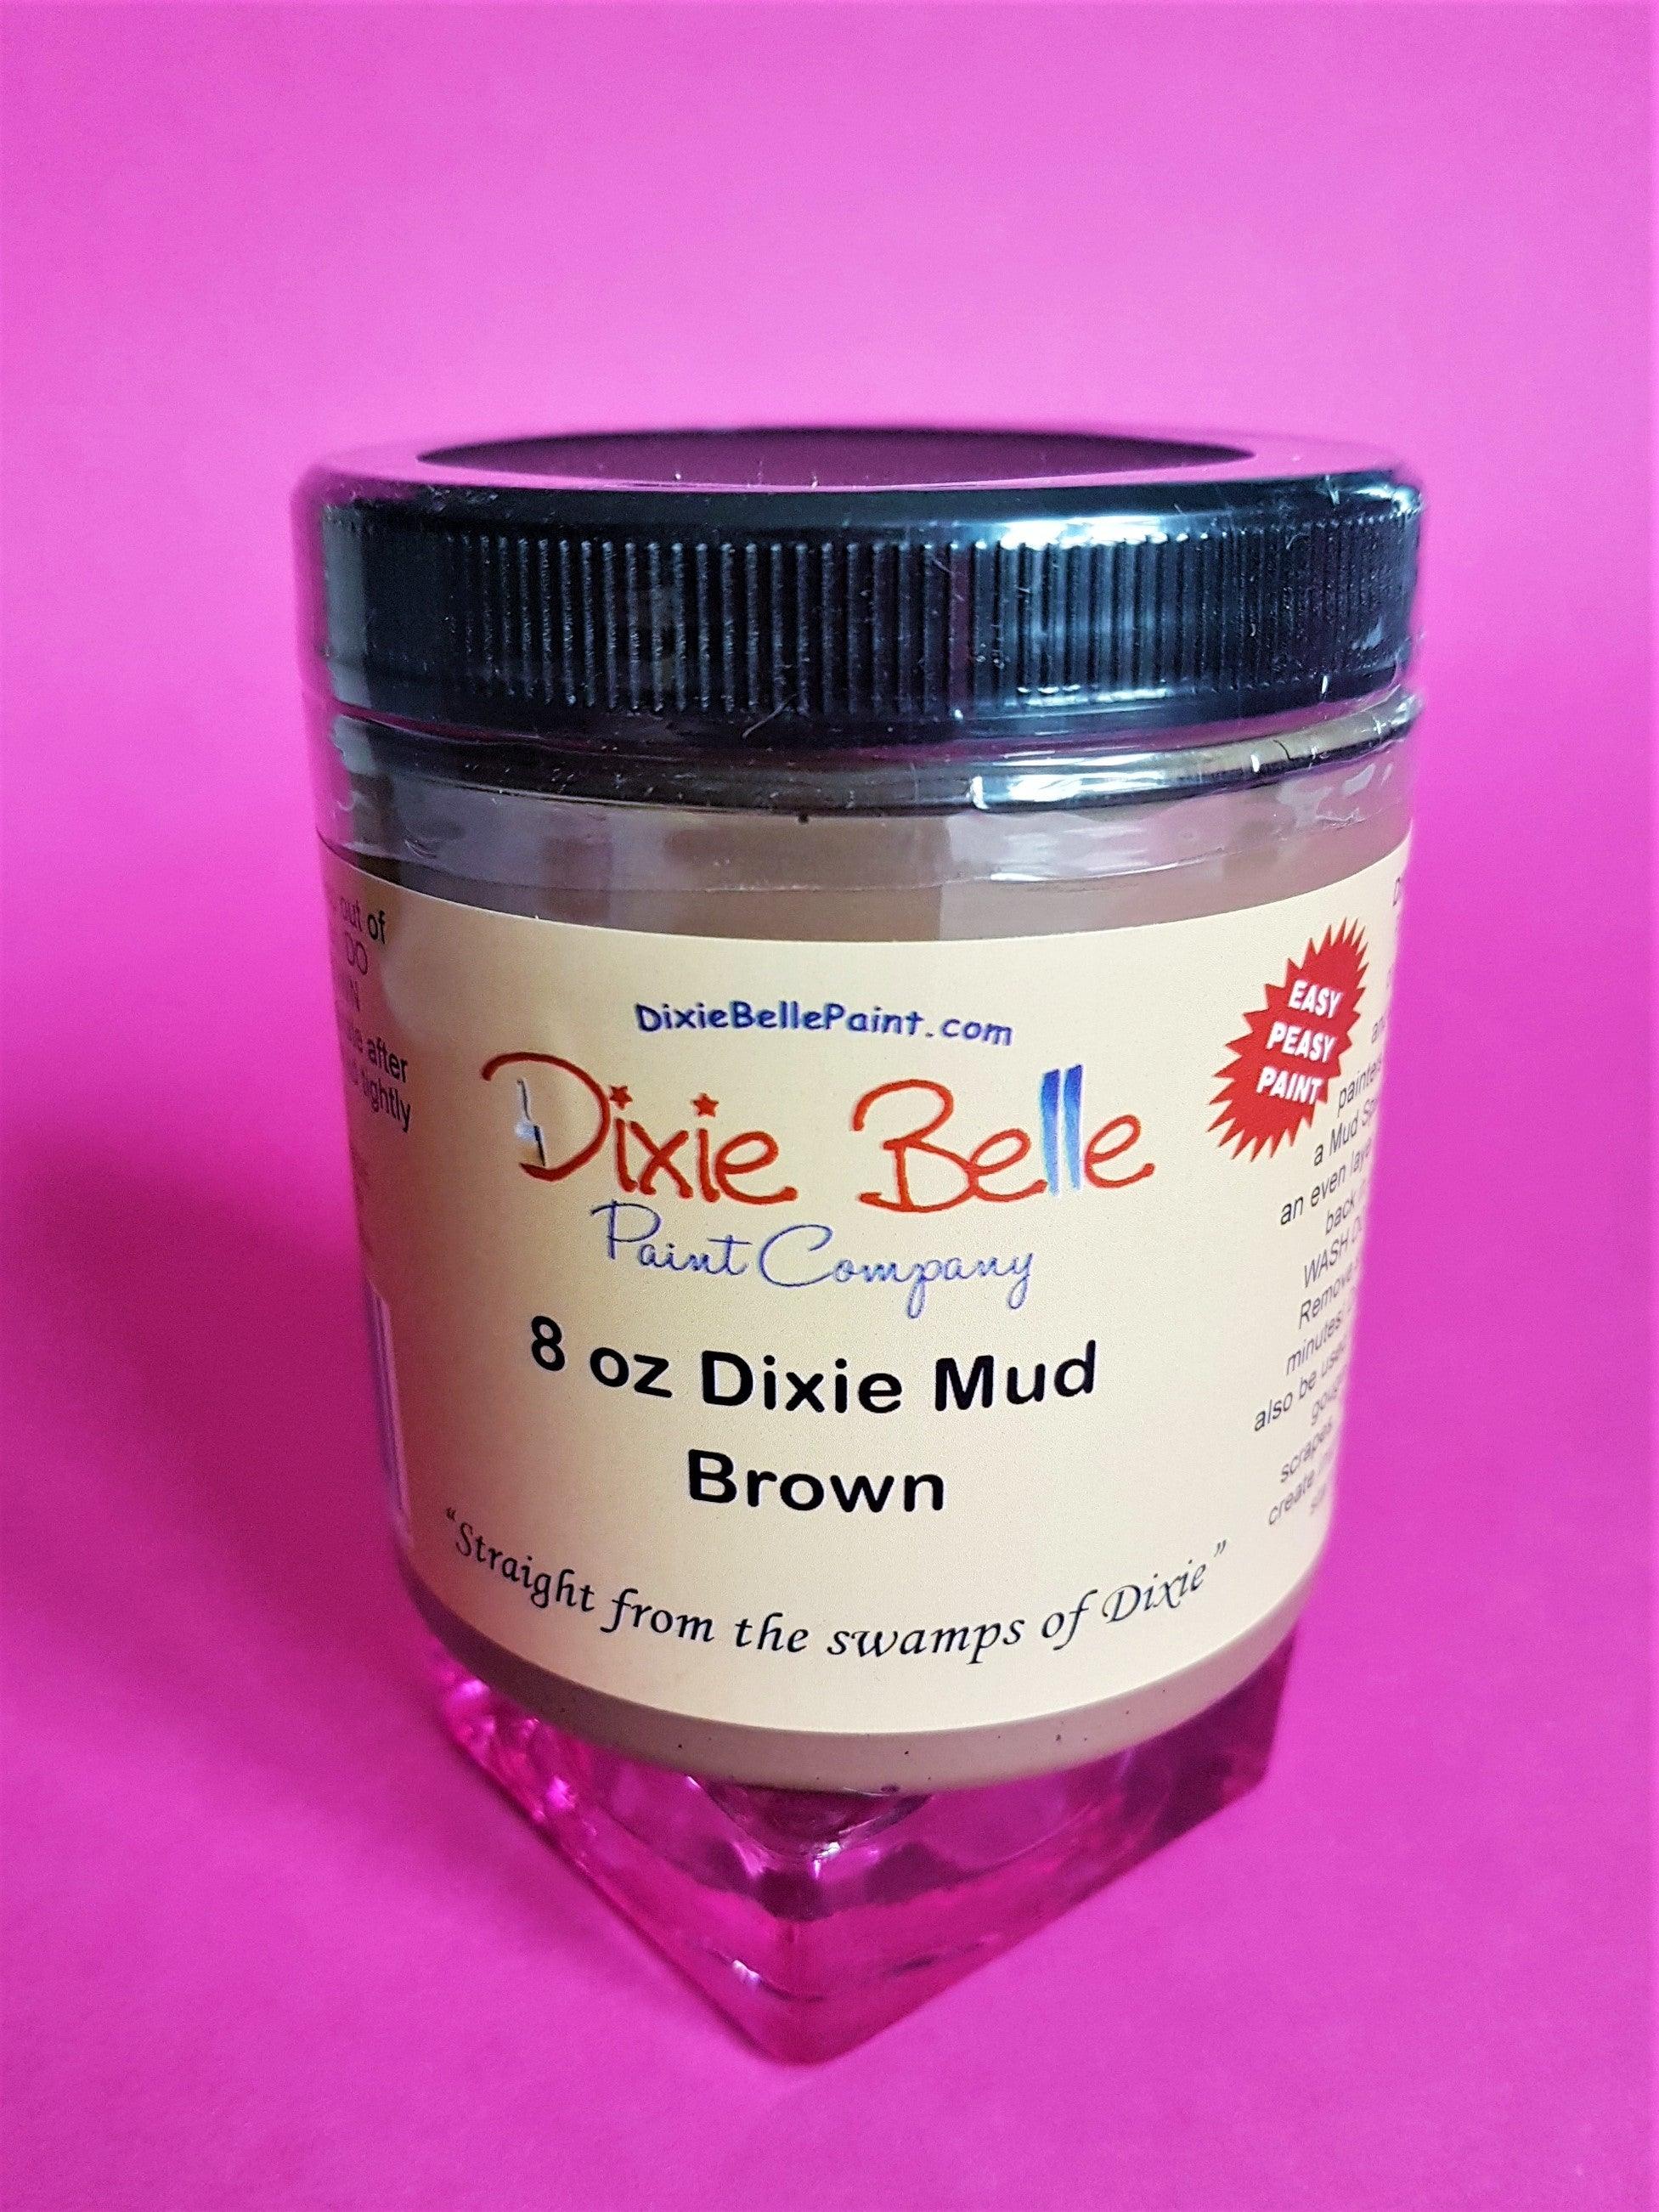 Dixie Belle Mud, white, brown, black, wooden spatula